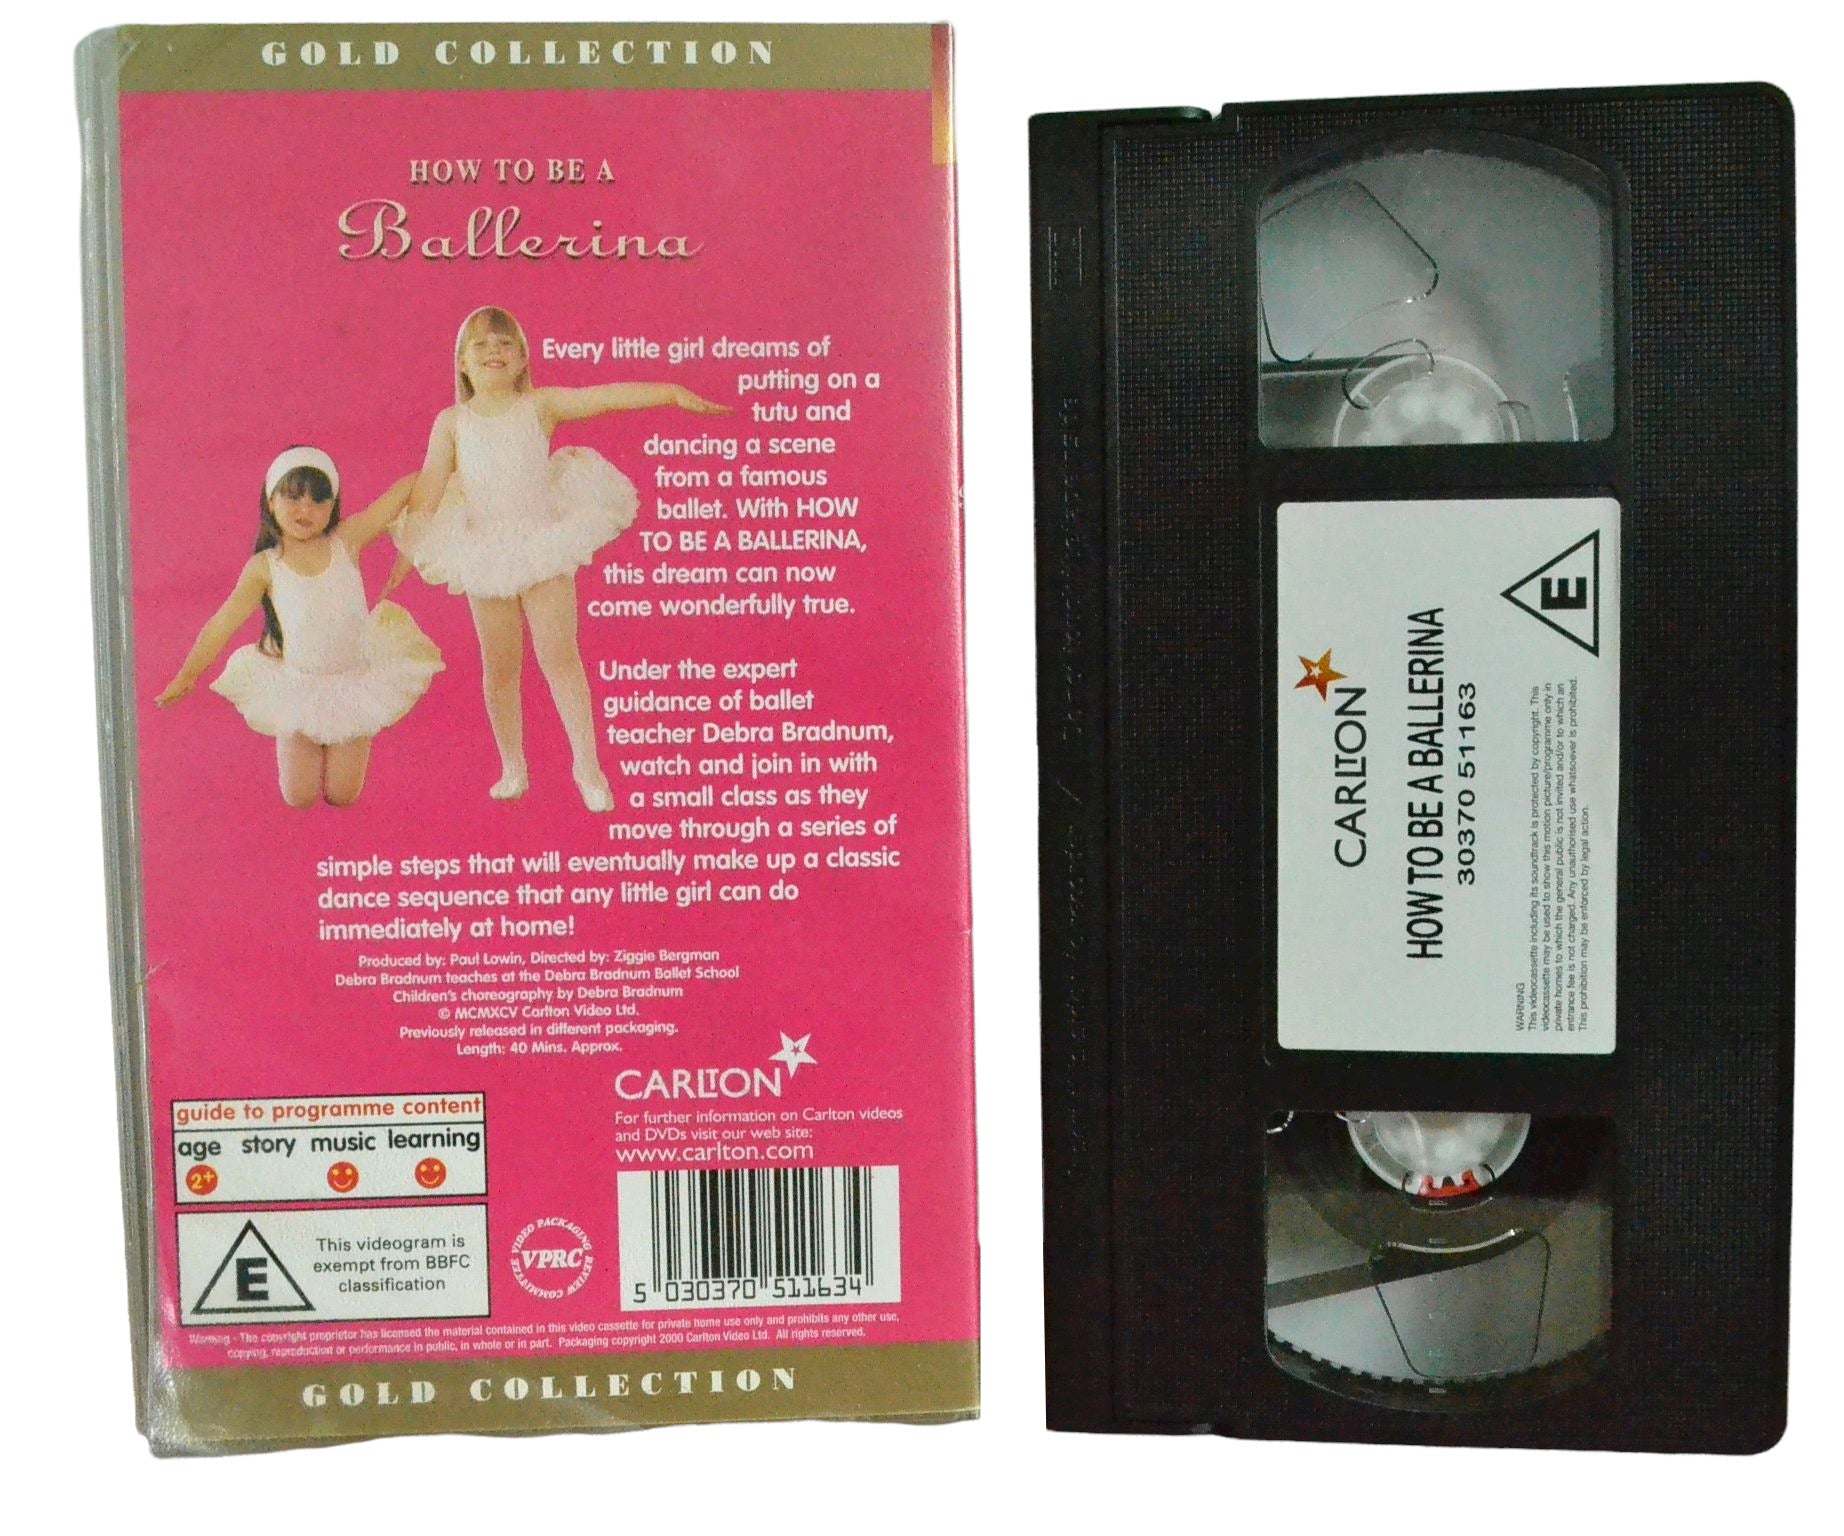 To　Golden　Pal　Movies　Be　little　A　Children's　true)　dream　girl's　5030370511634　Class　Carlton　Ballerina　–　(Every　How　VHS　come　LTD